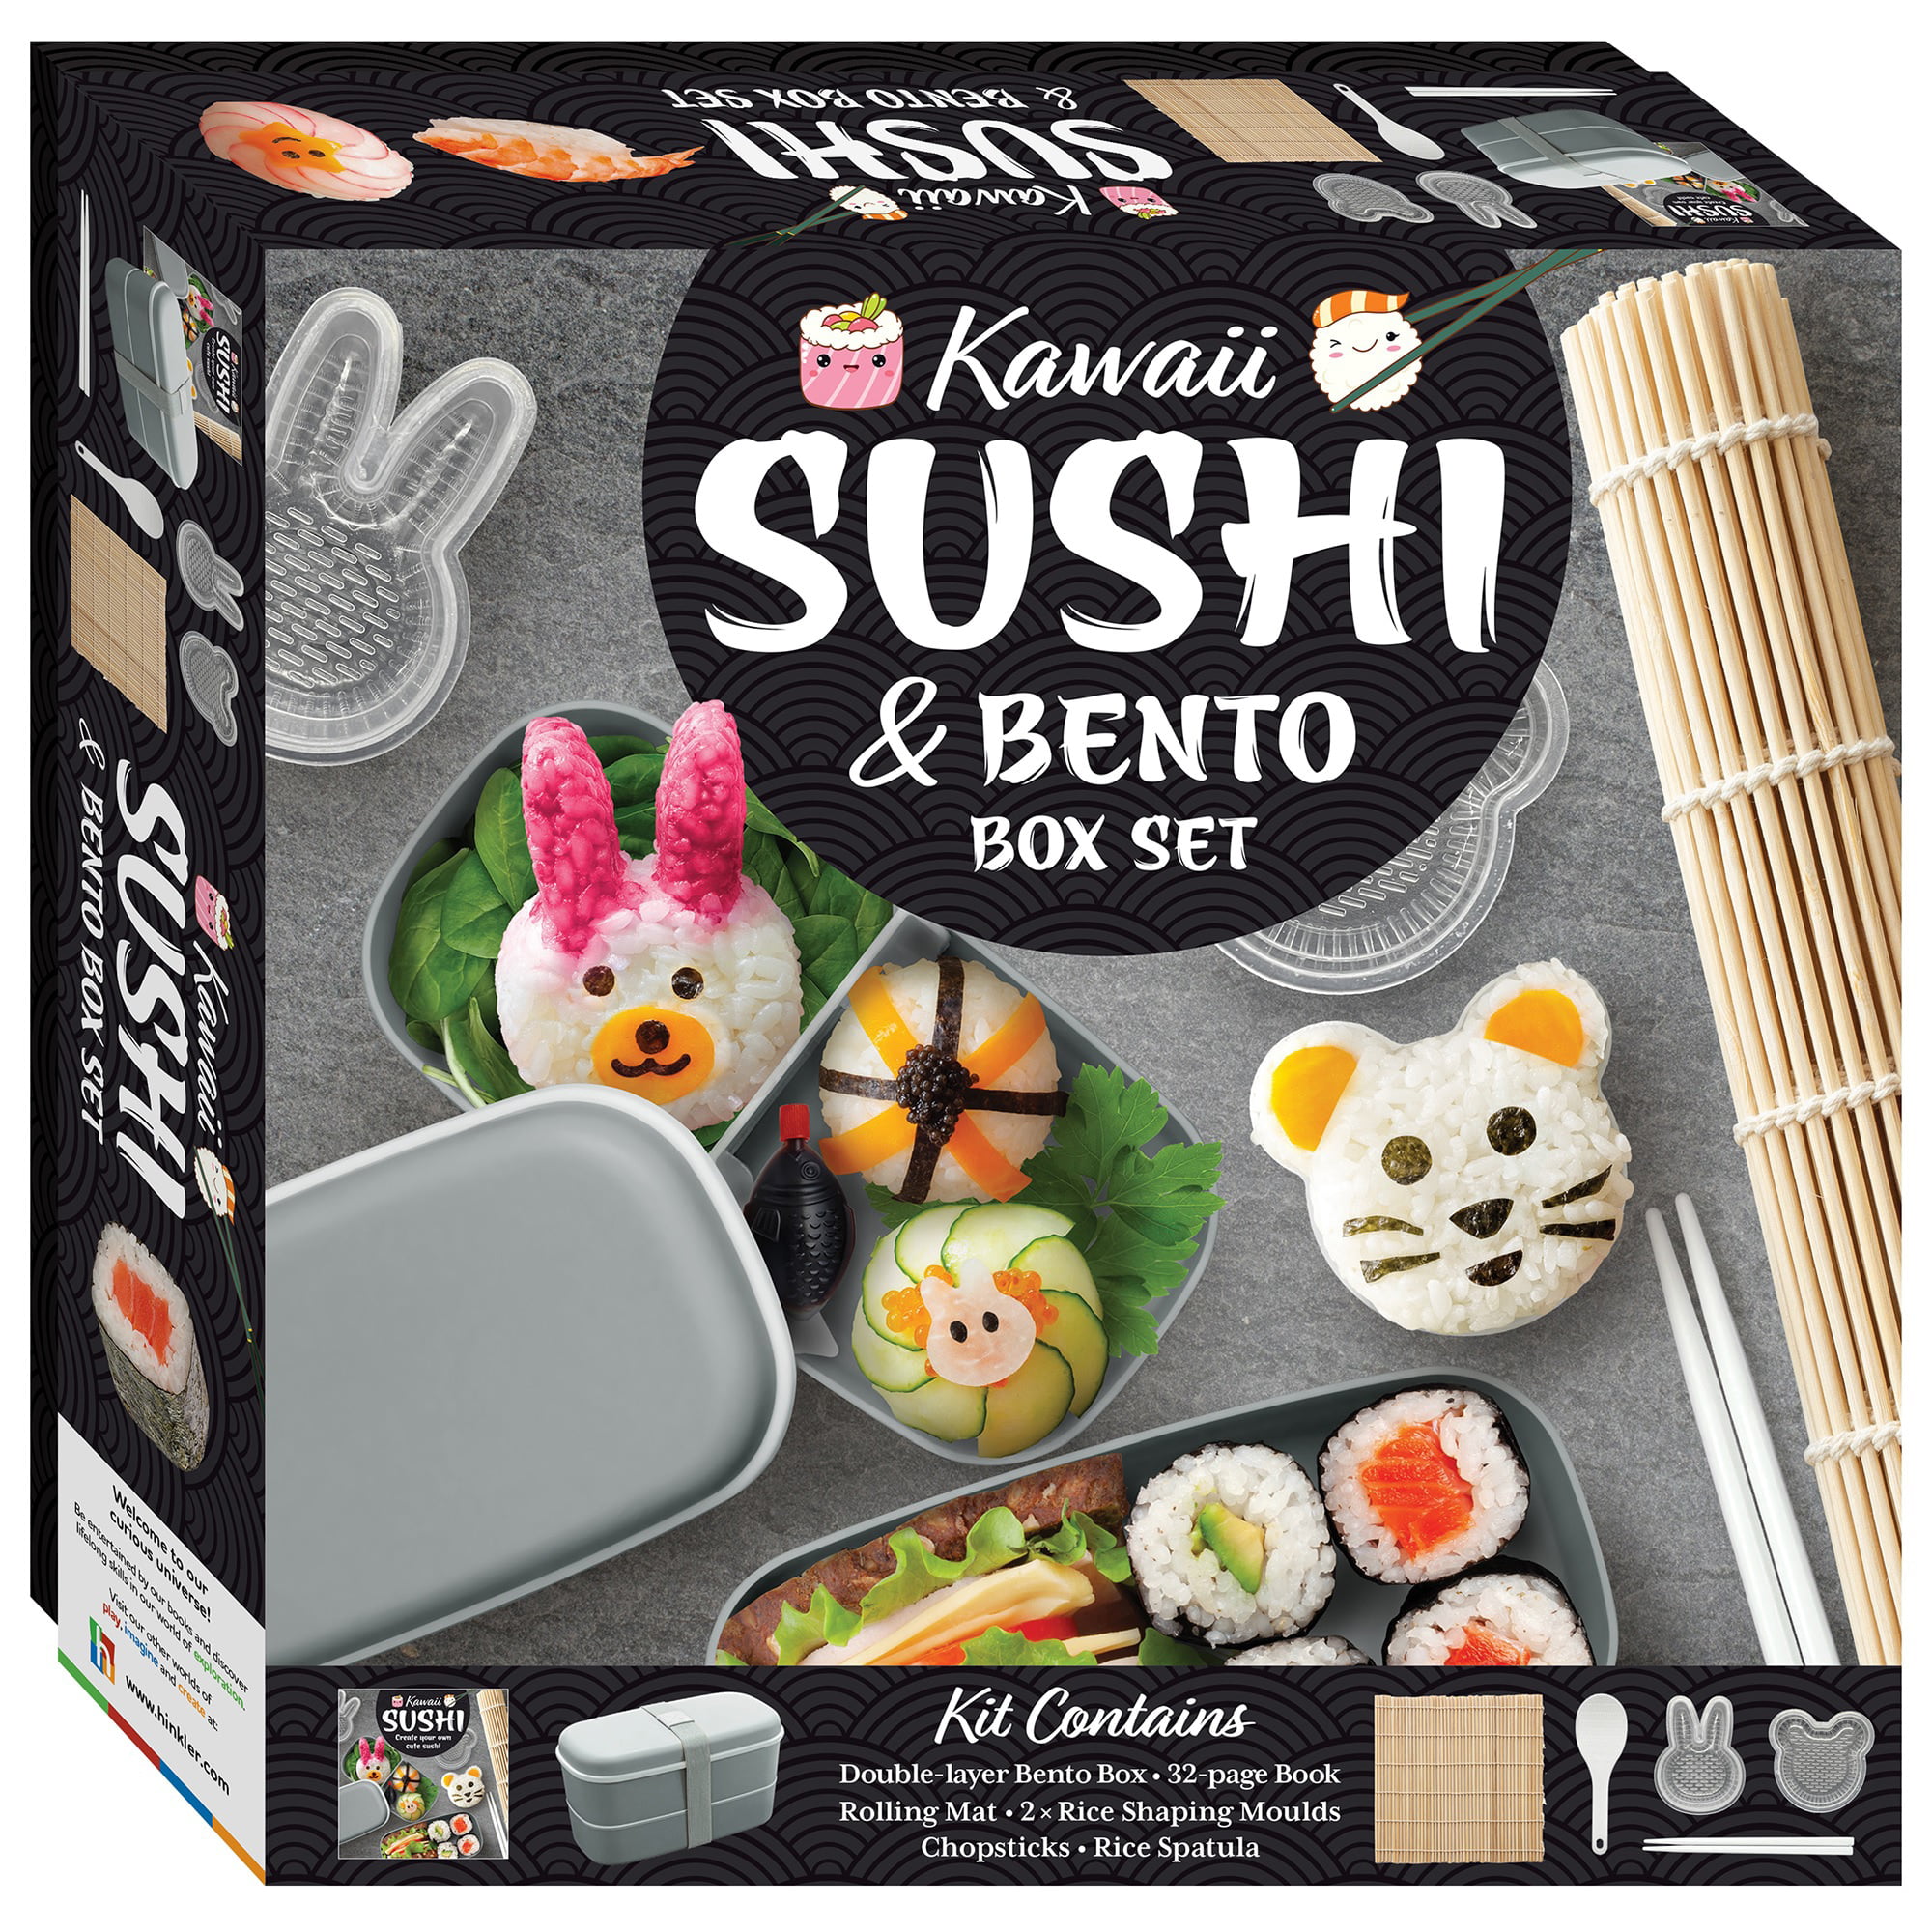 Hinkler: Kawaii Sushi & Bento Box Set - Learn To Make Cute Sushi, Japanese  Cooking Kit, w/ Utensils, Rolling Mat, Rice Molds & More, Kids & Adults 